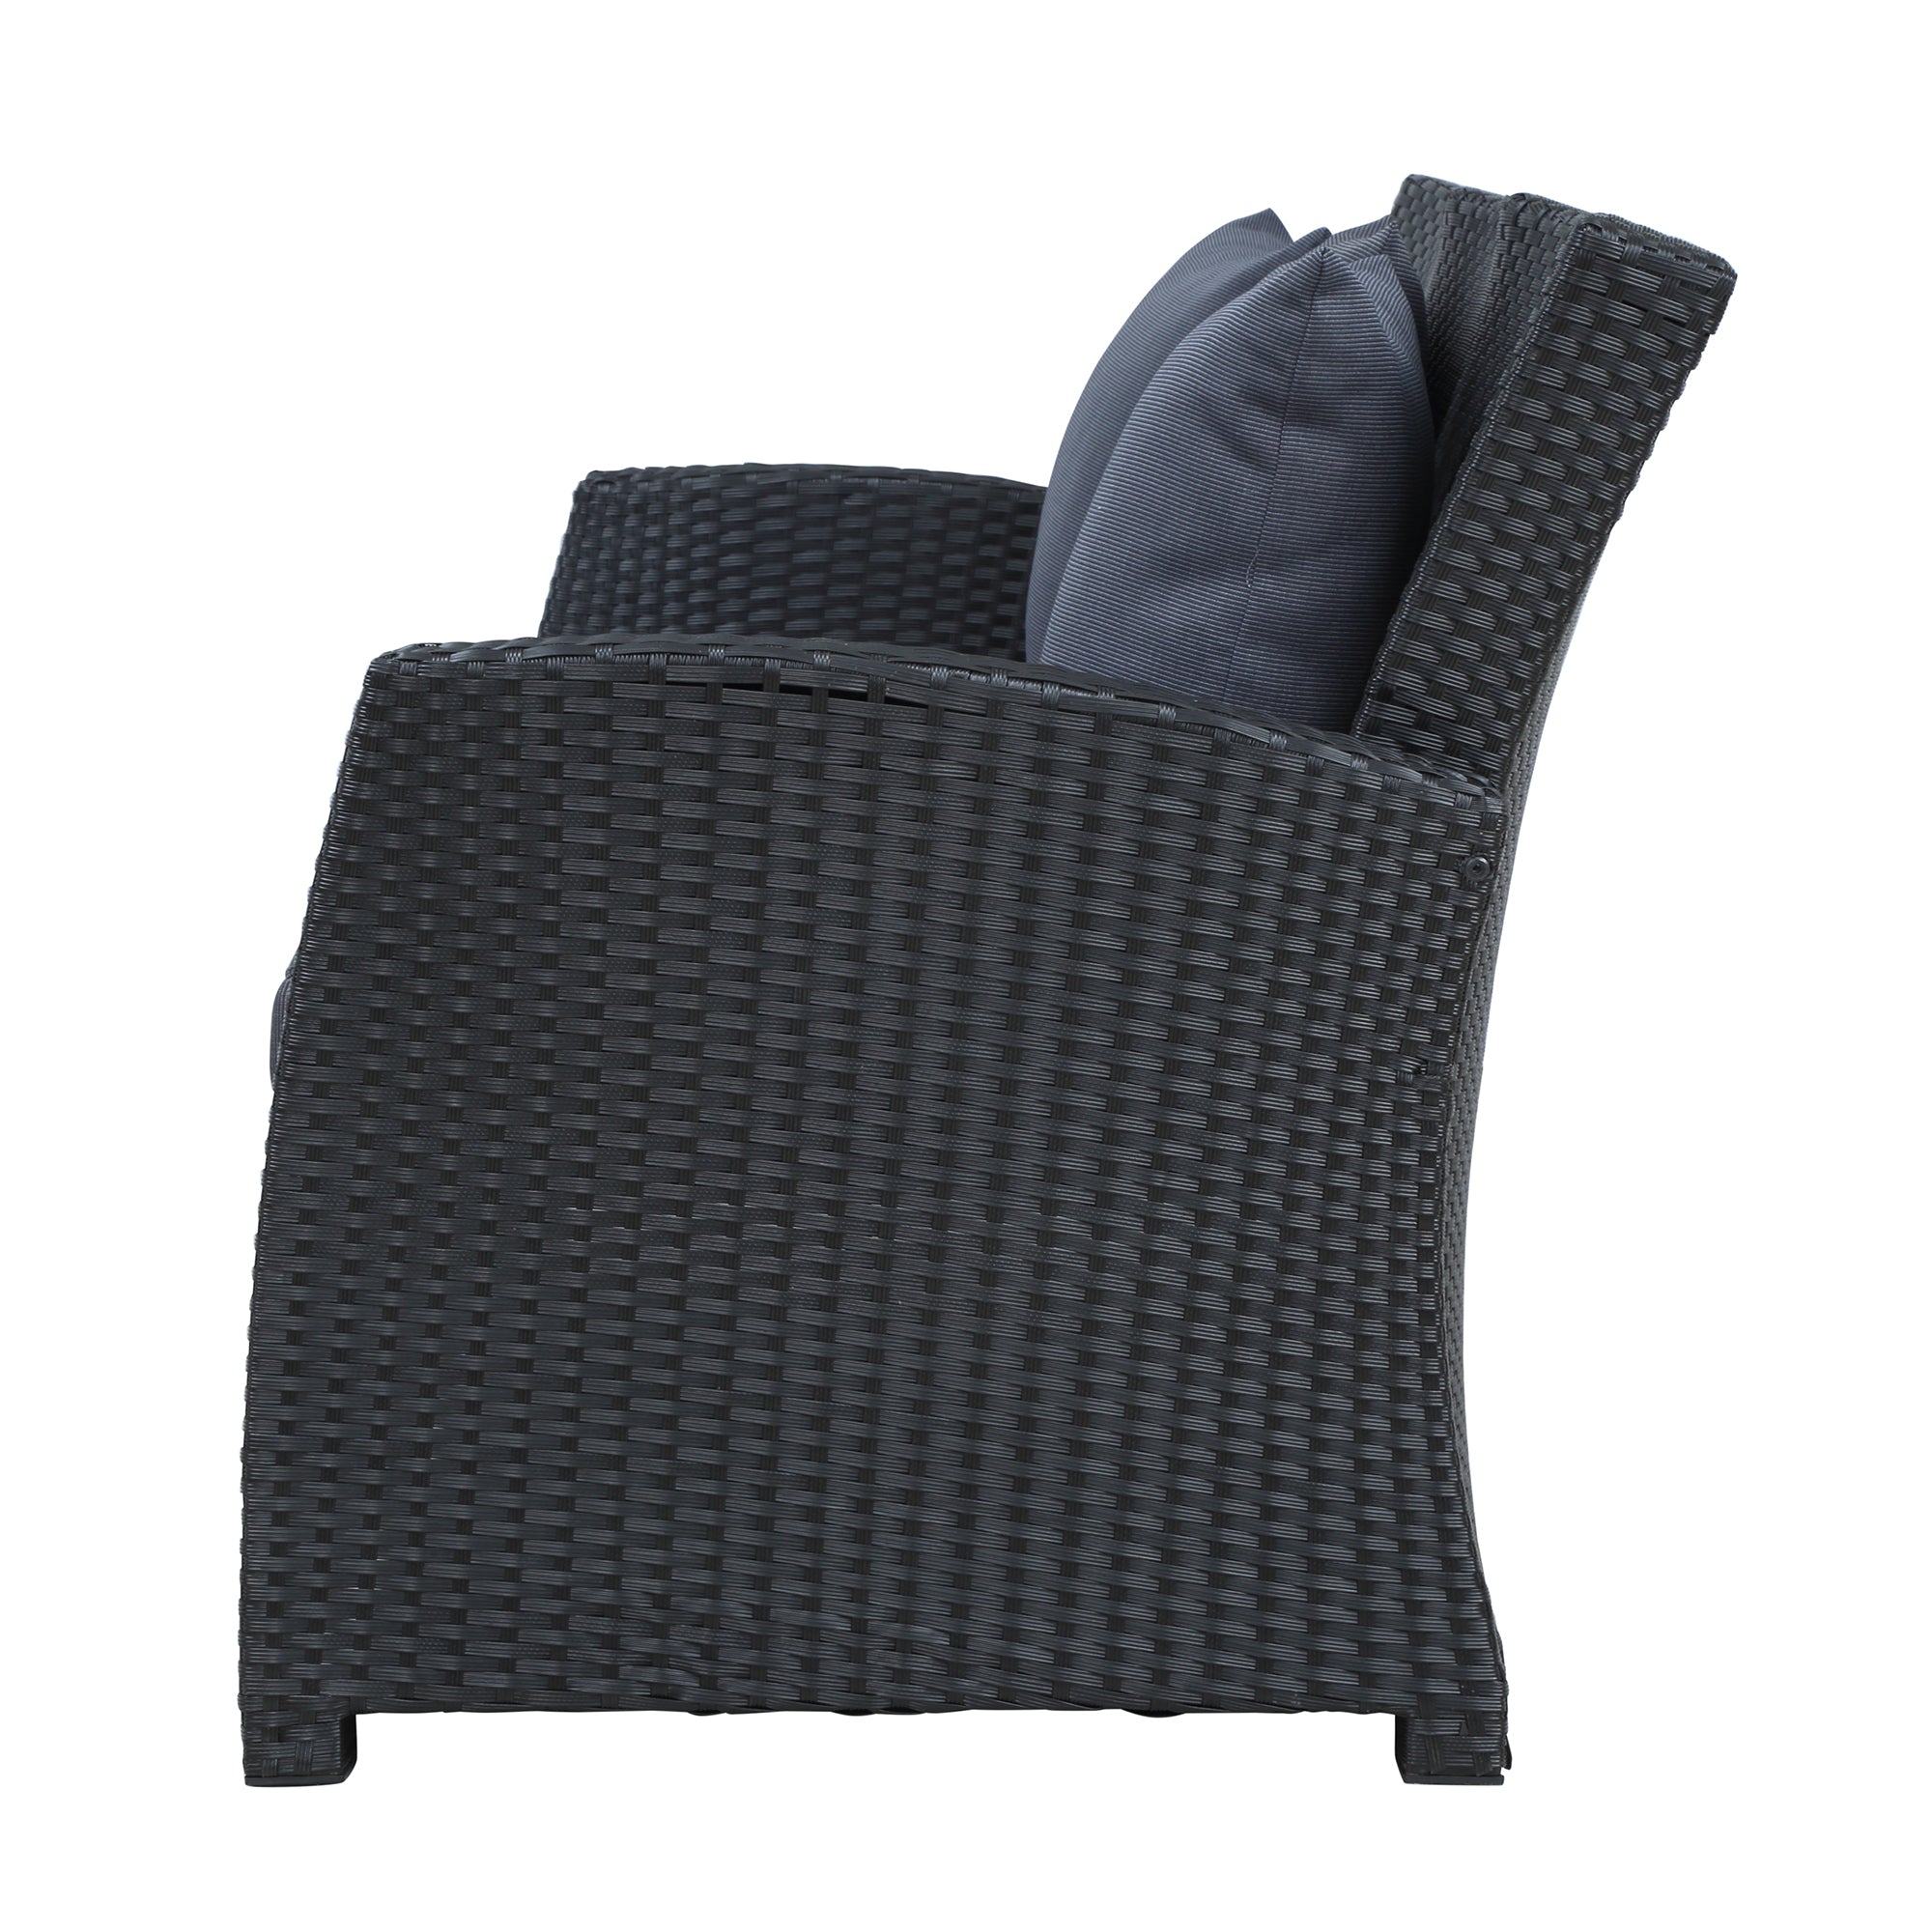 4-Piece Outdoor Black Wicker Furniture Sofa Set with Dark Grey Cushions